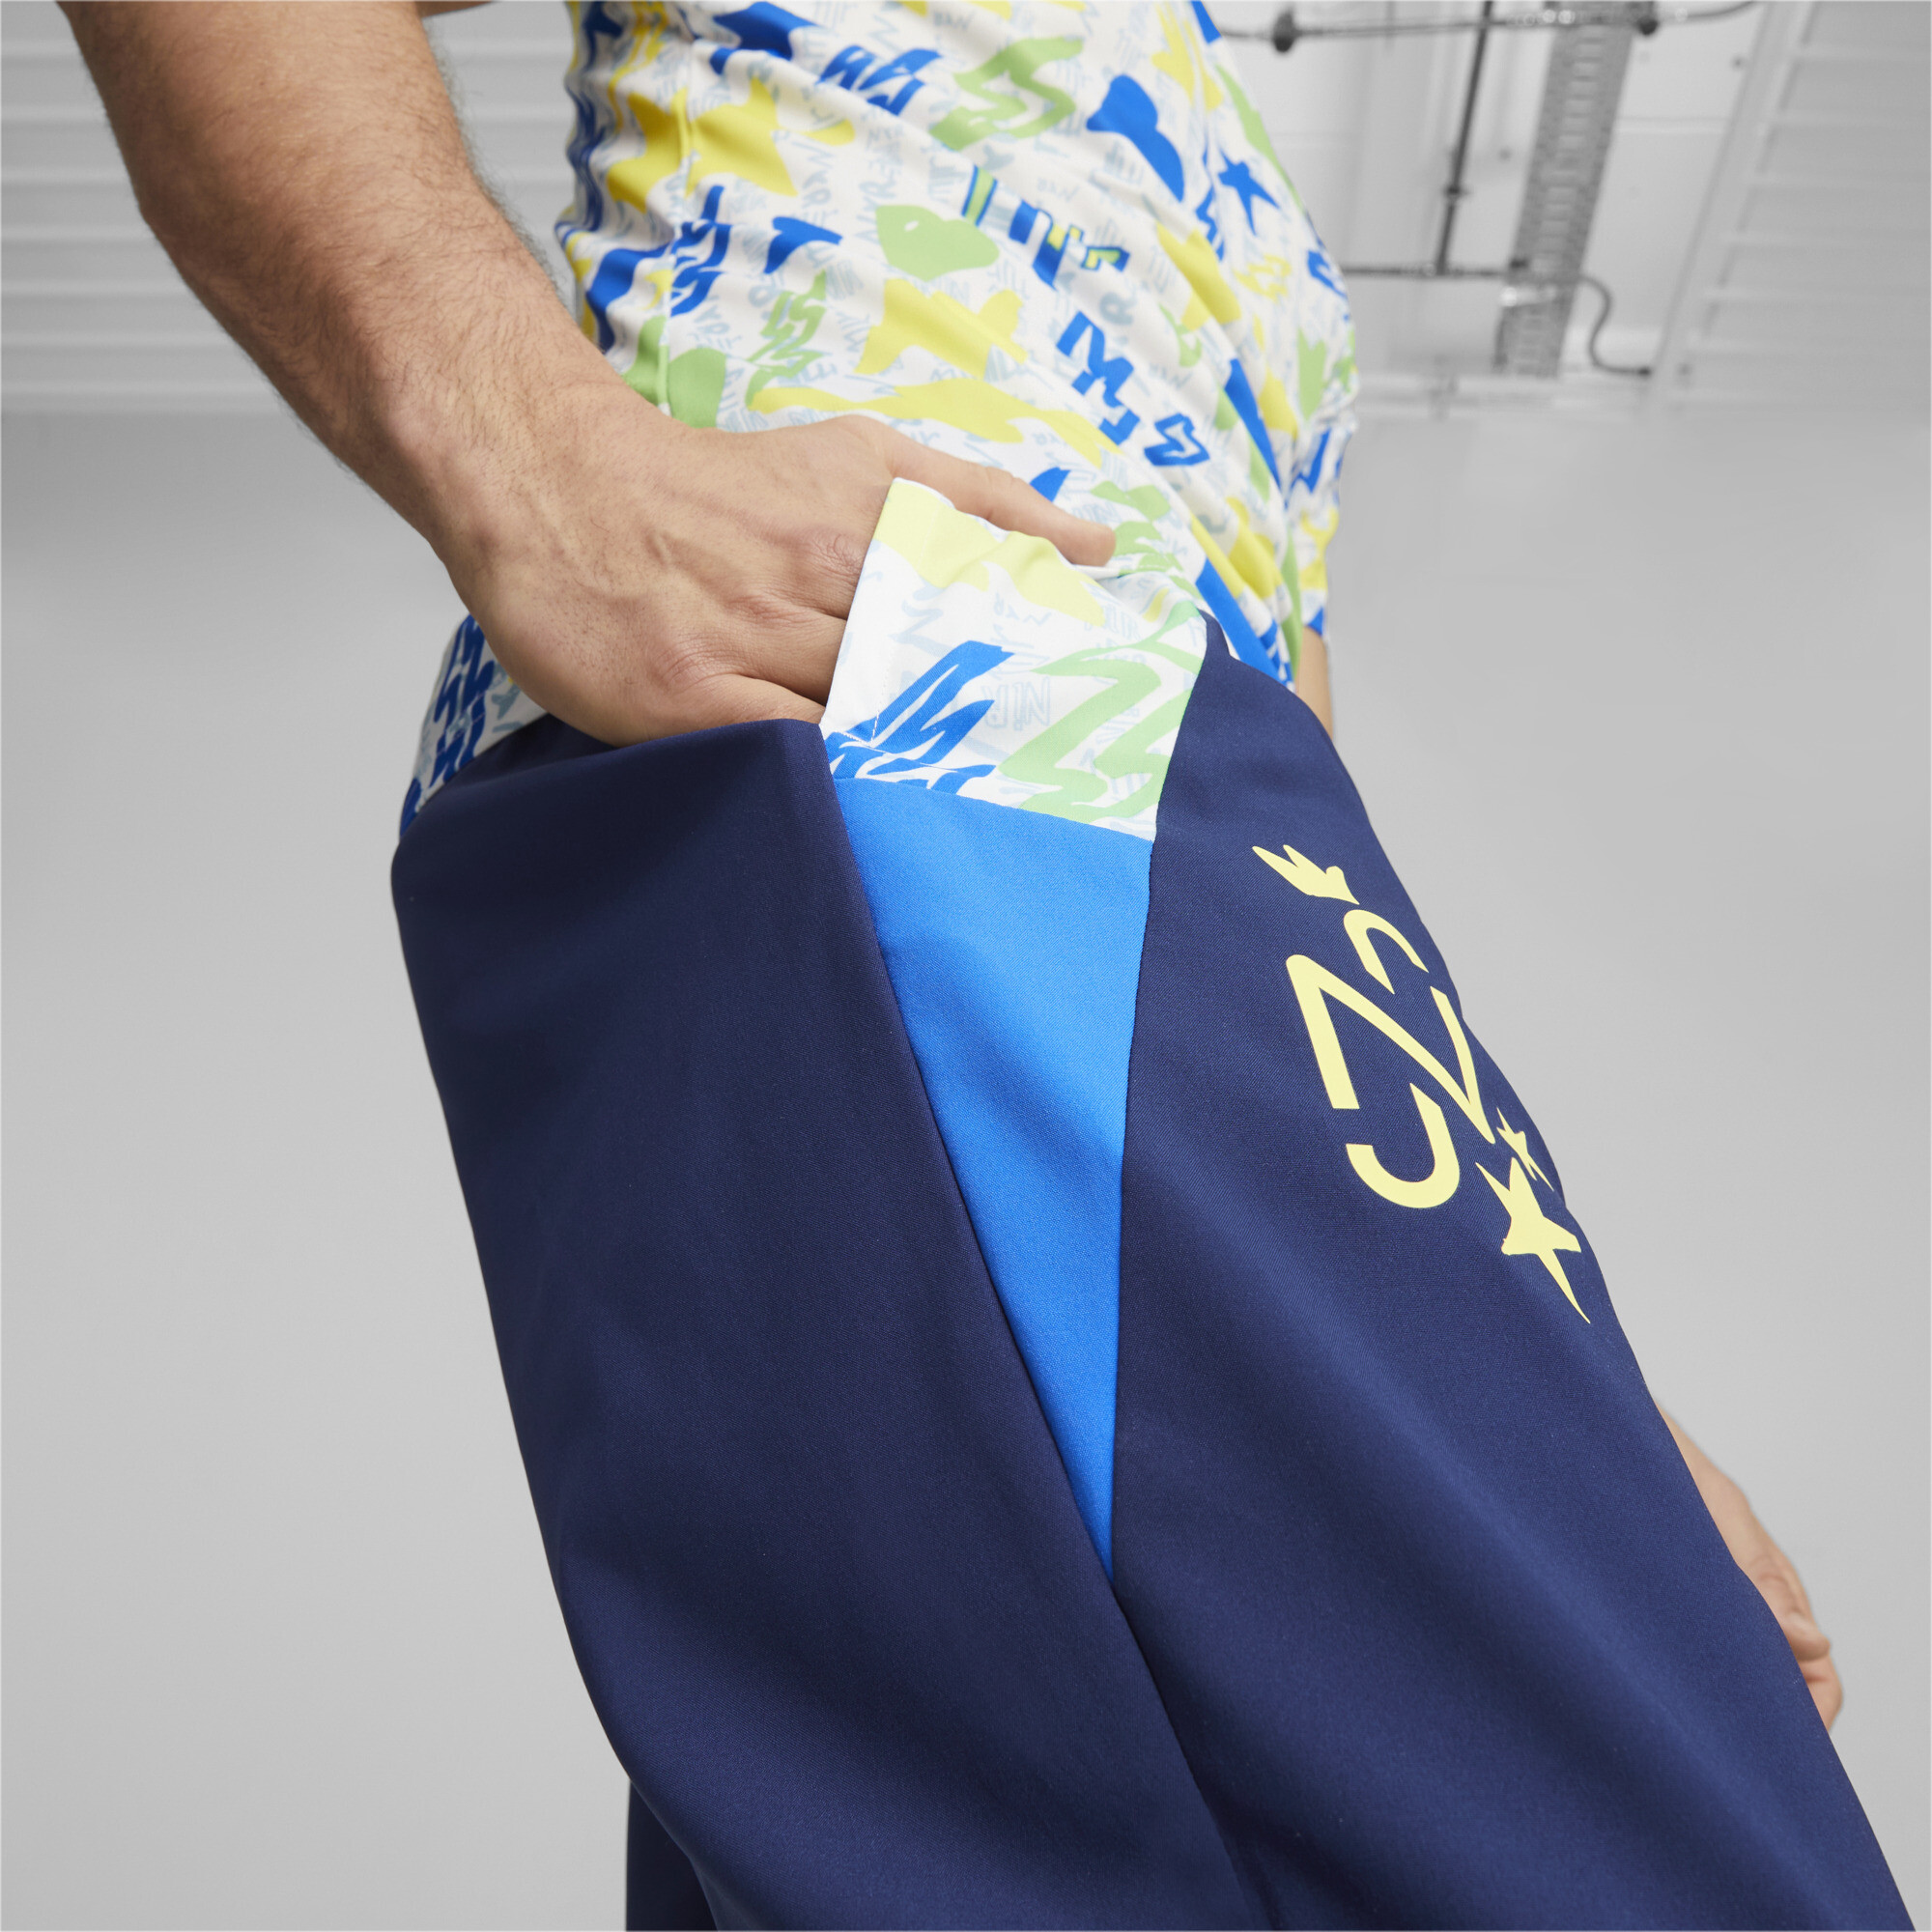 Men's PUMA Neymar Jr Football Pants In Blue, Size 2XL